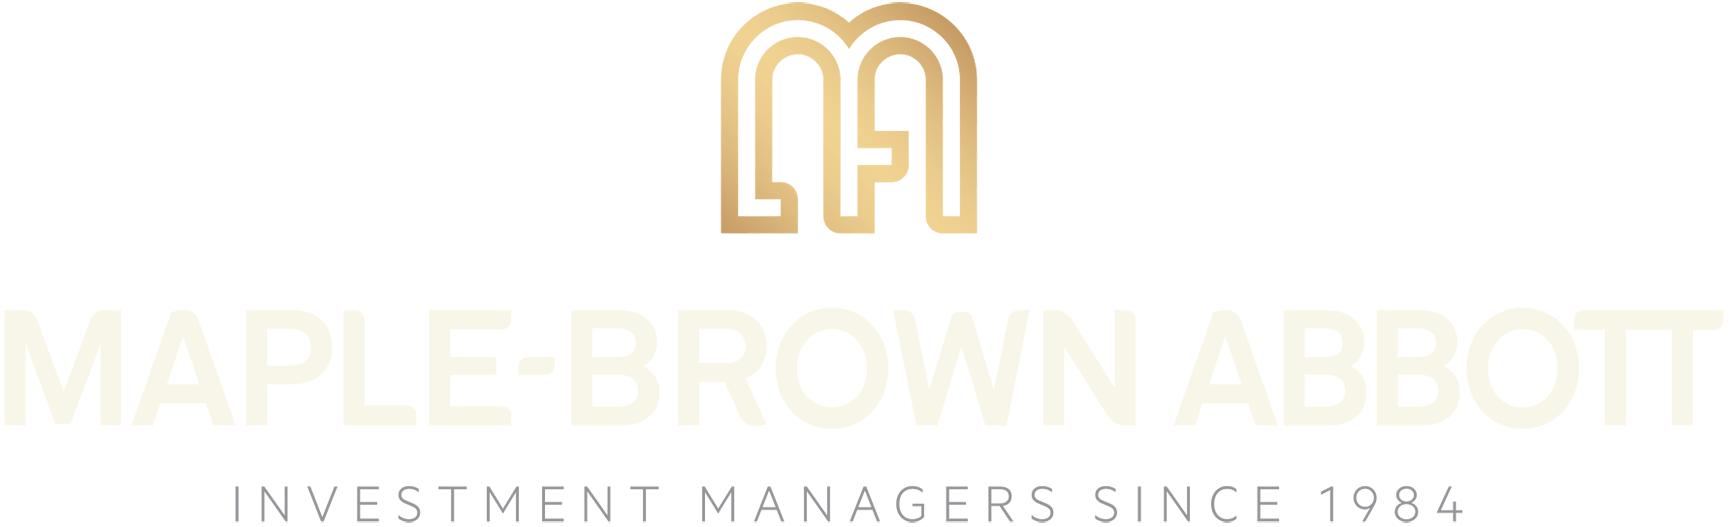 Abbott Logo - Maple Brown Abbott